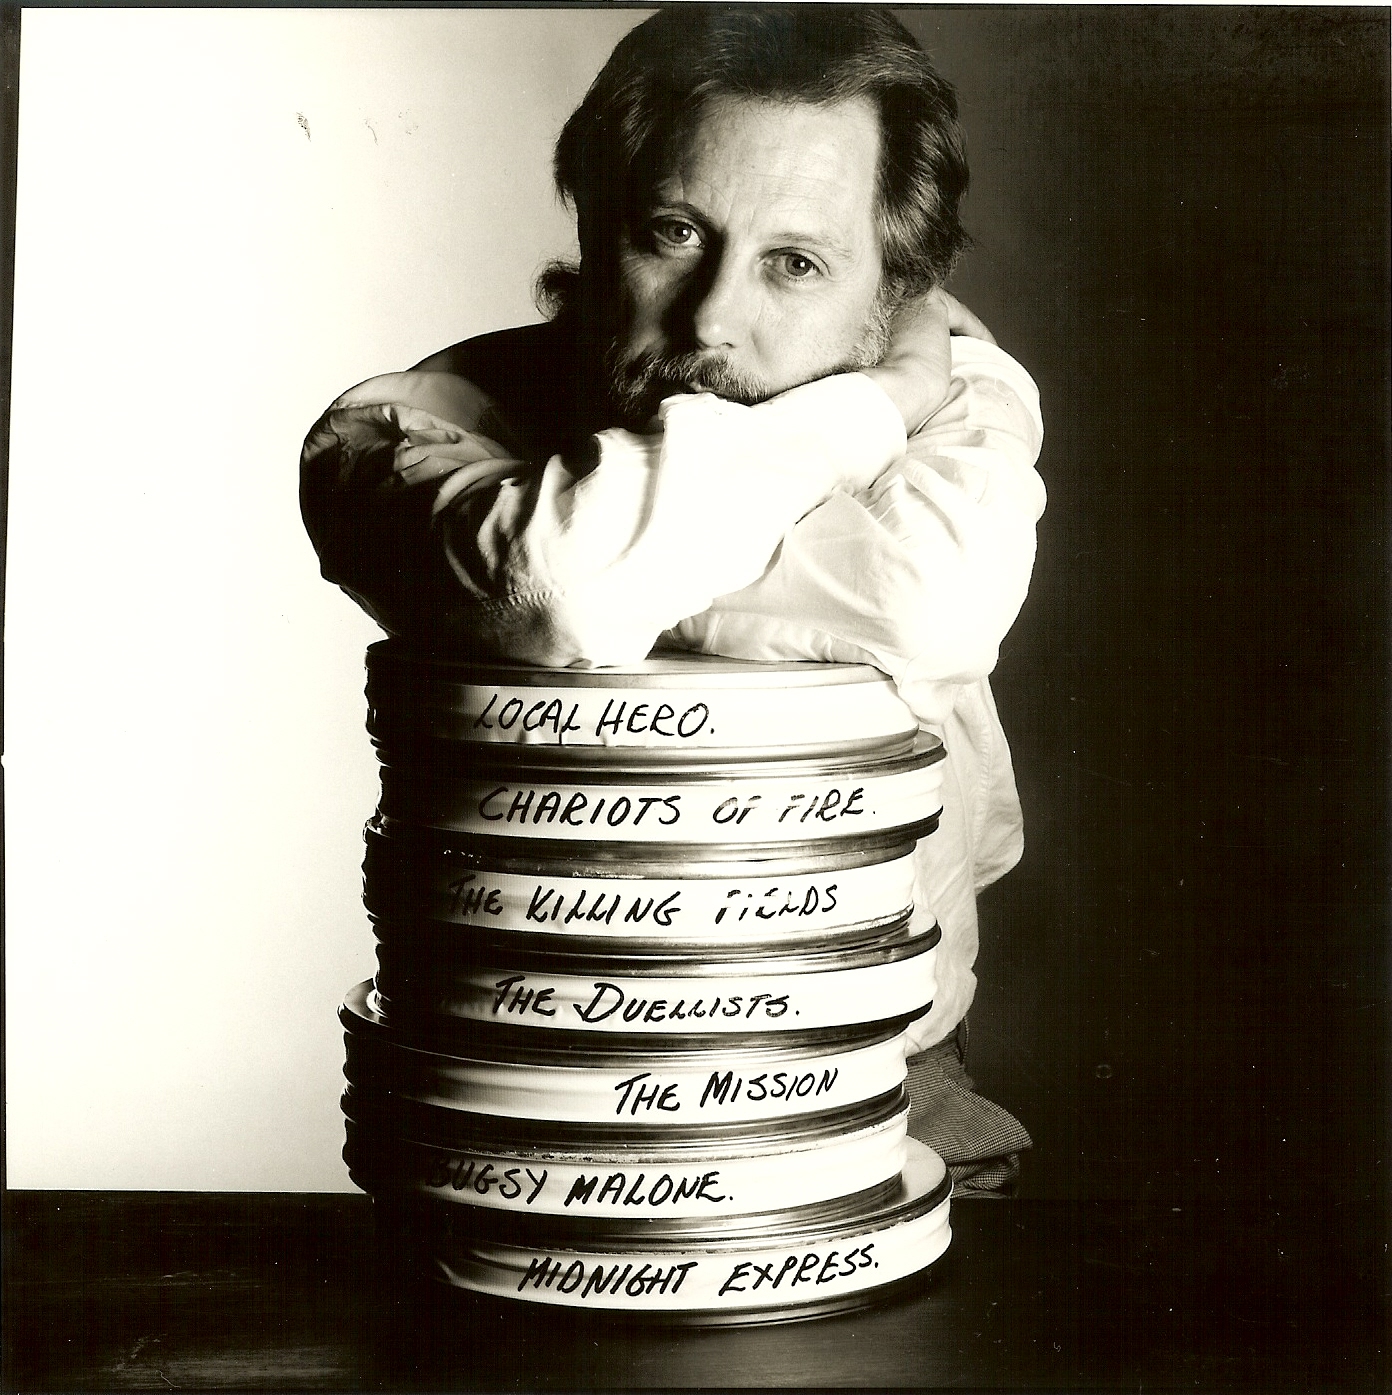 David Puttnam with film reels